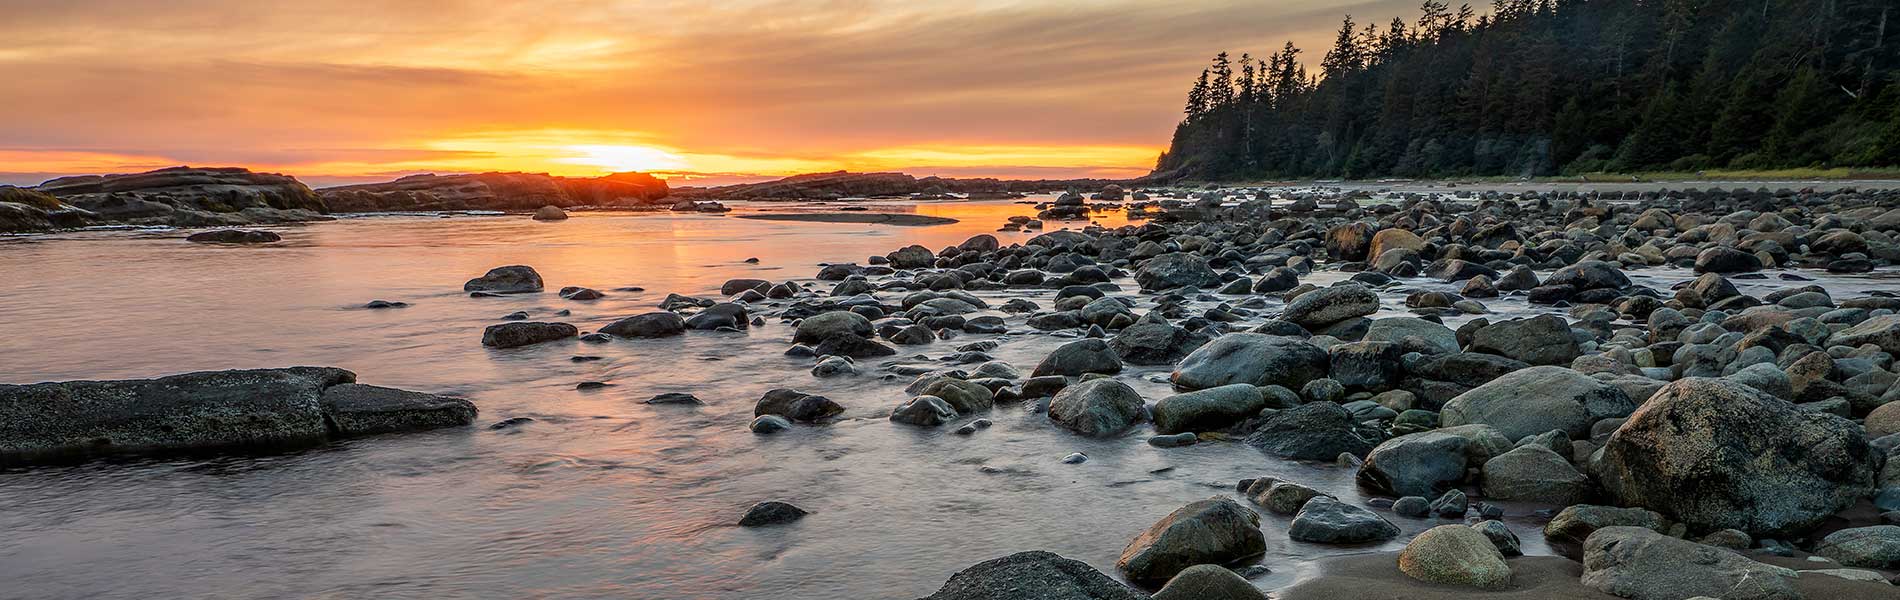 rocky shoreline during sunset